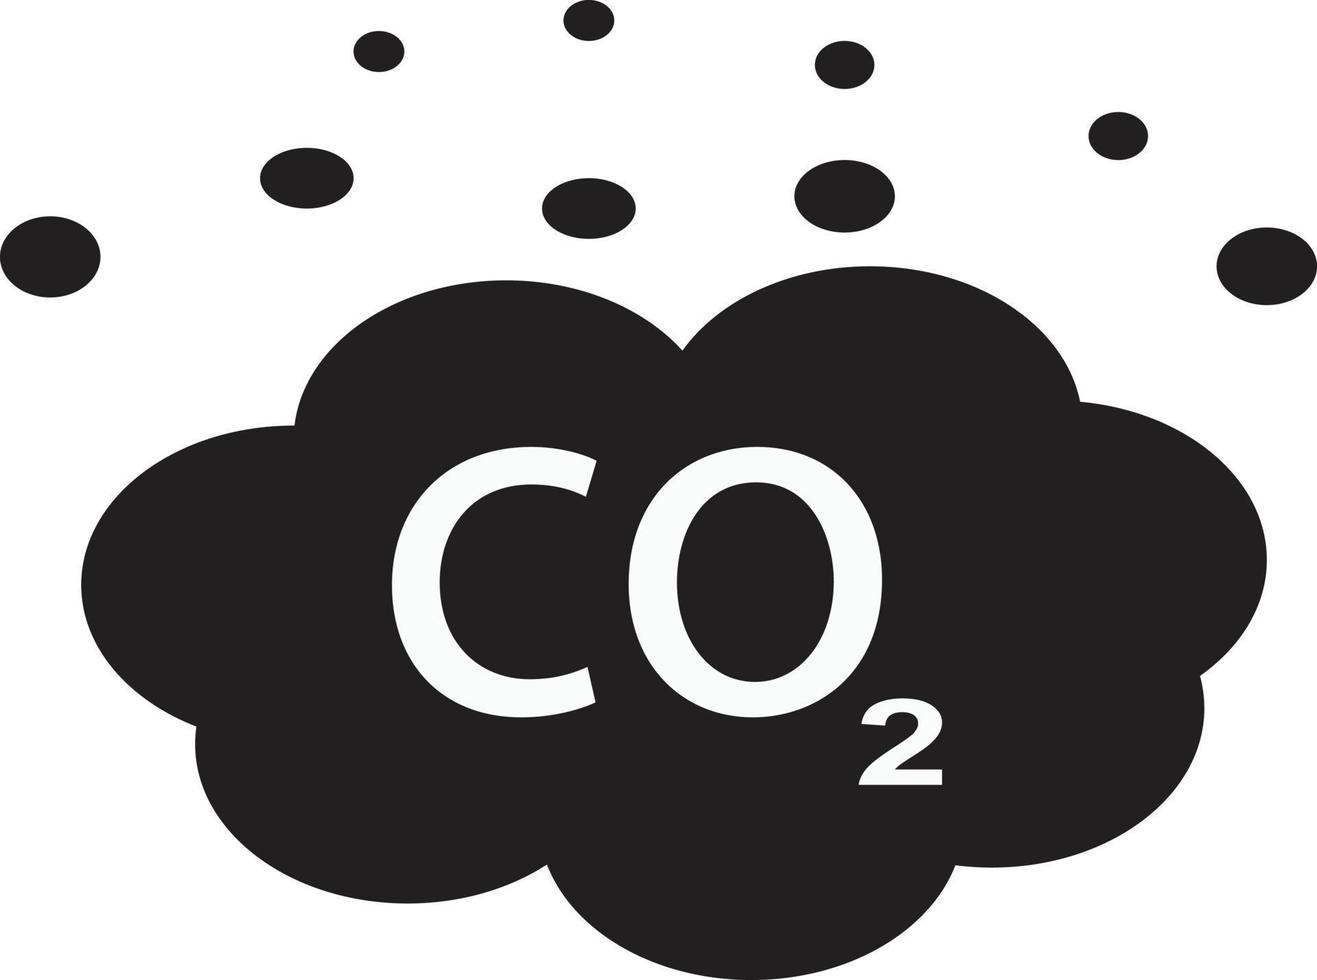 co2 icon. carbon dioxide s. Co2 emissions symbol. carbon emissions reduction sign. vector